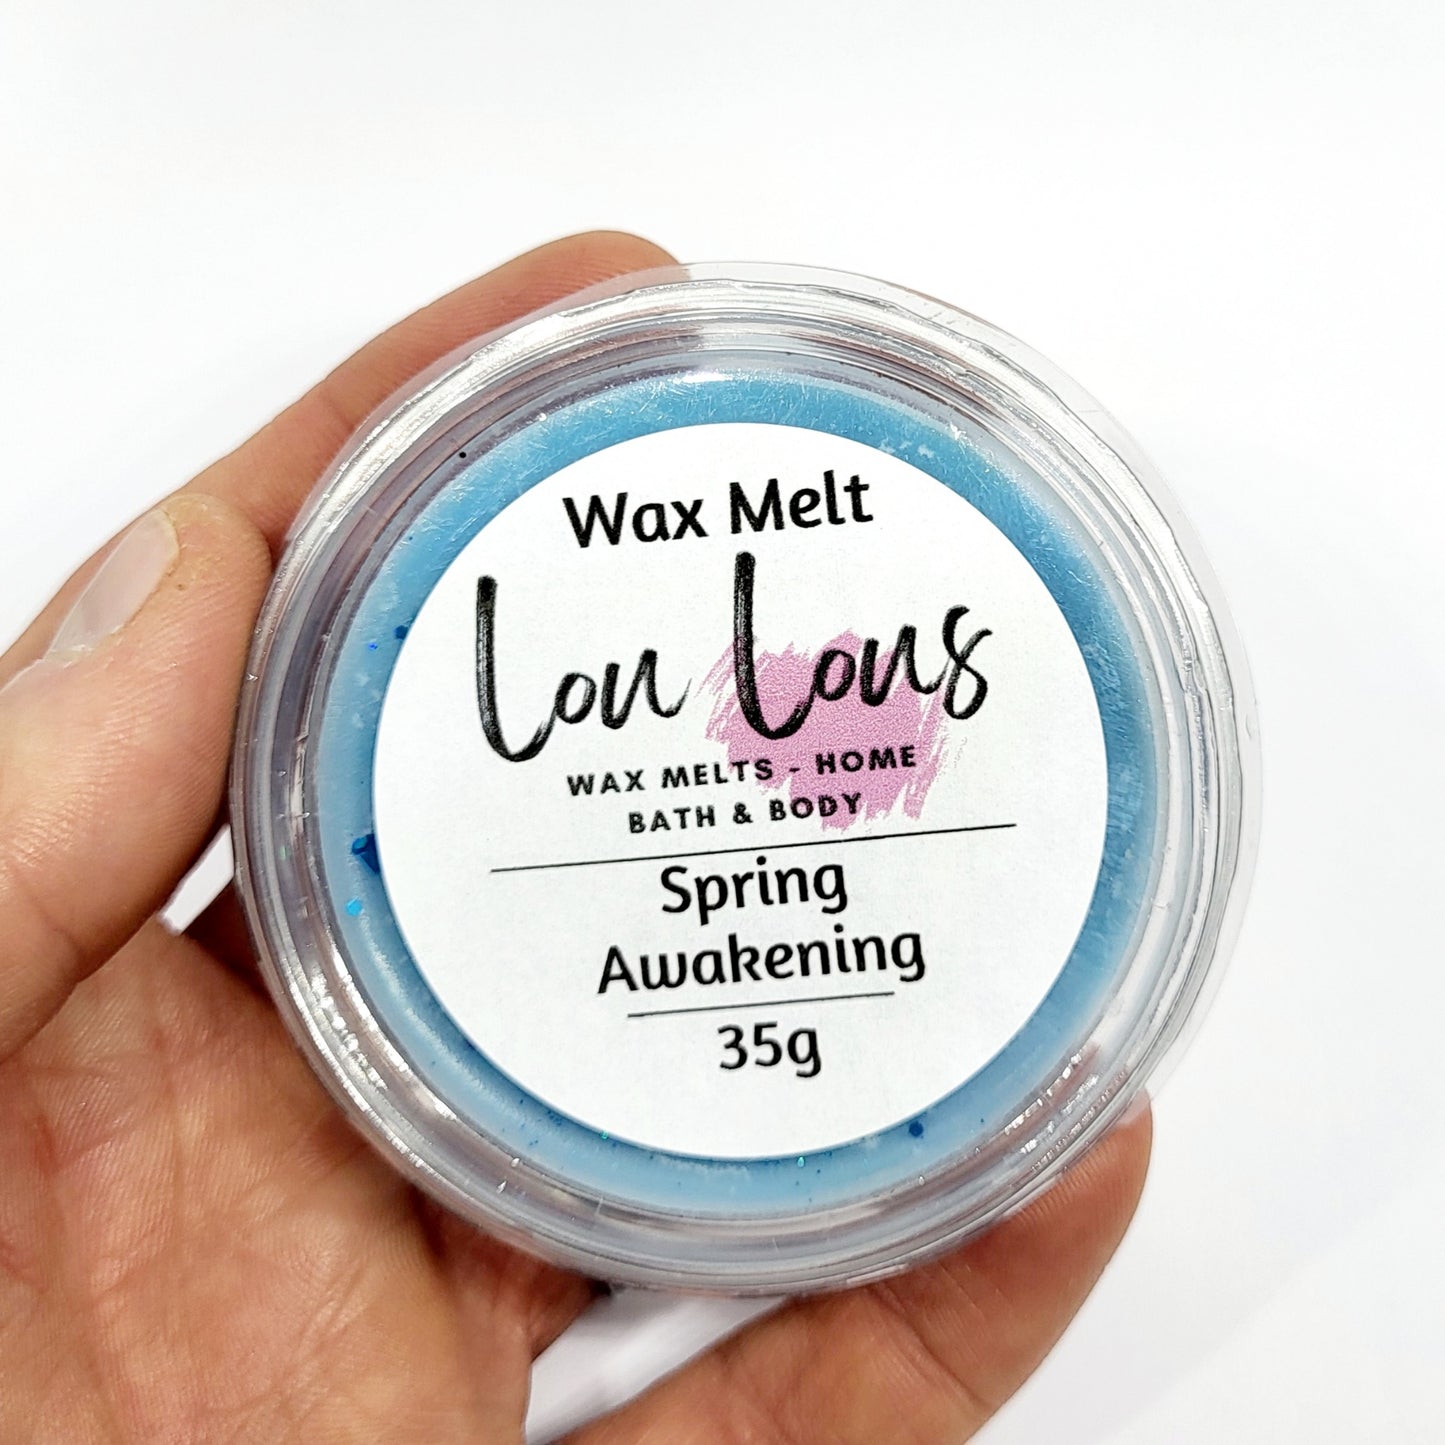 Spring Awakening Wax Melt Pot